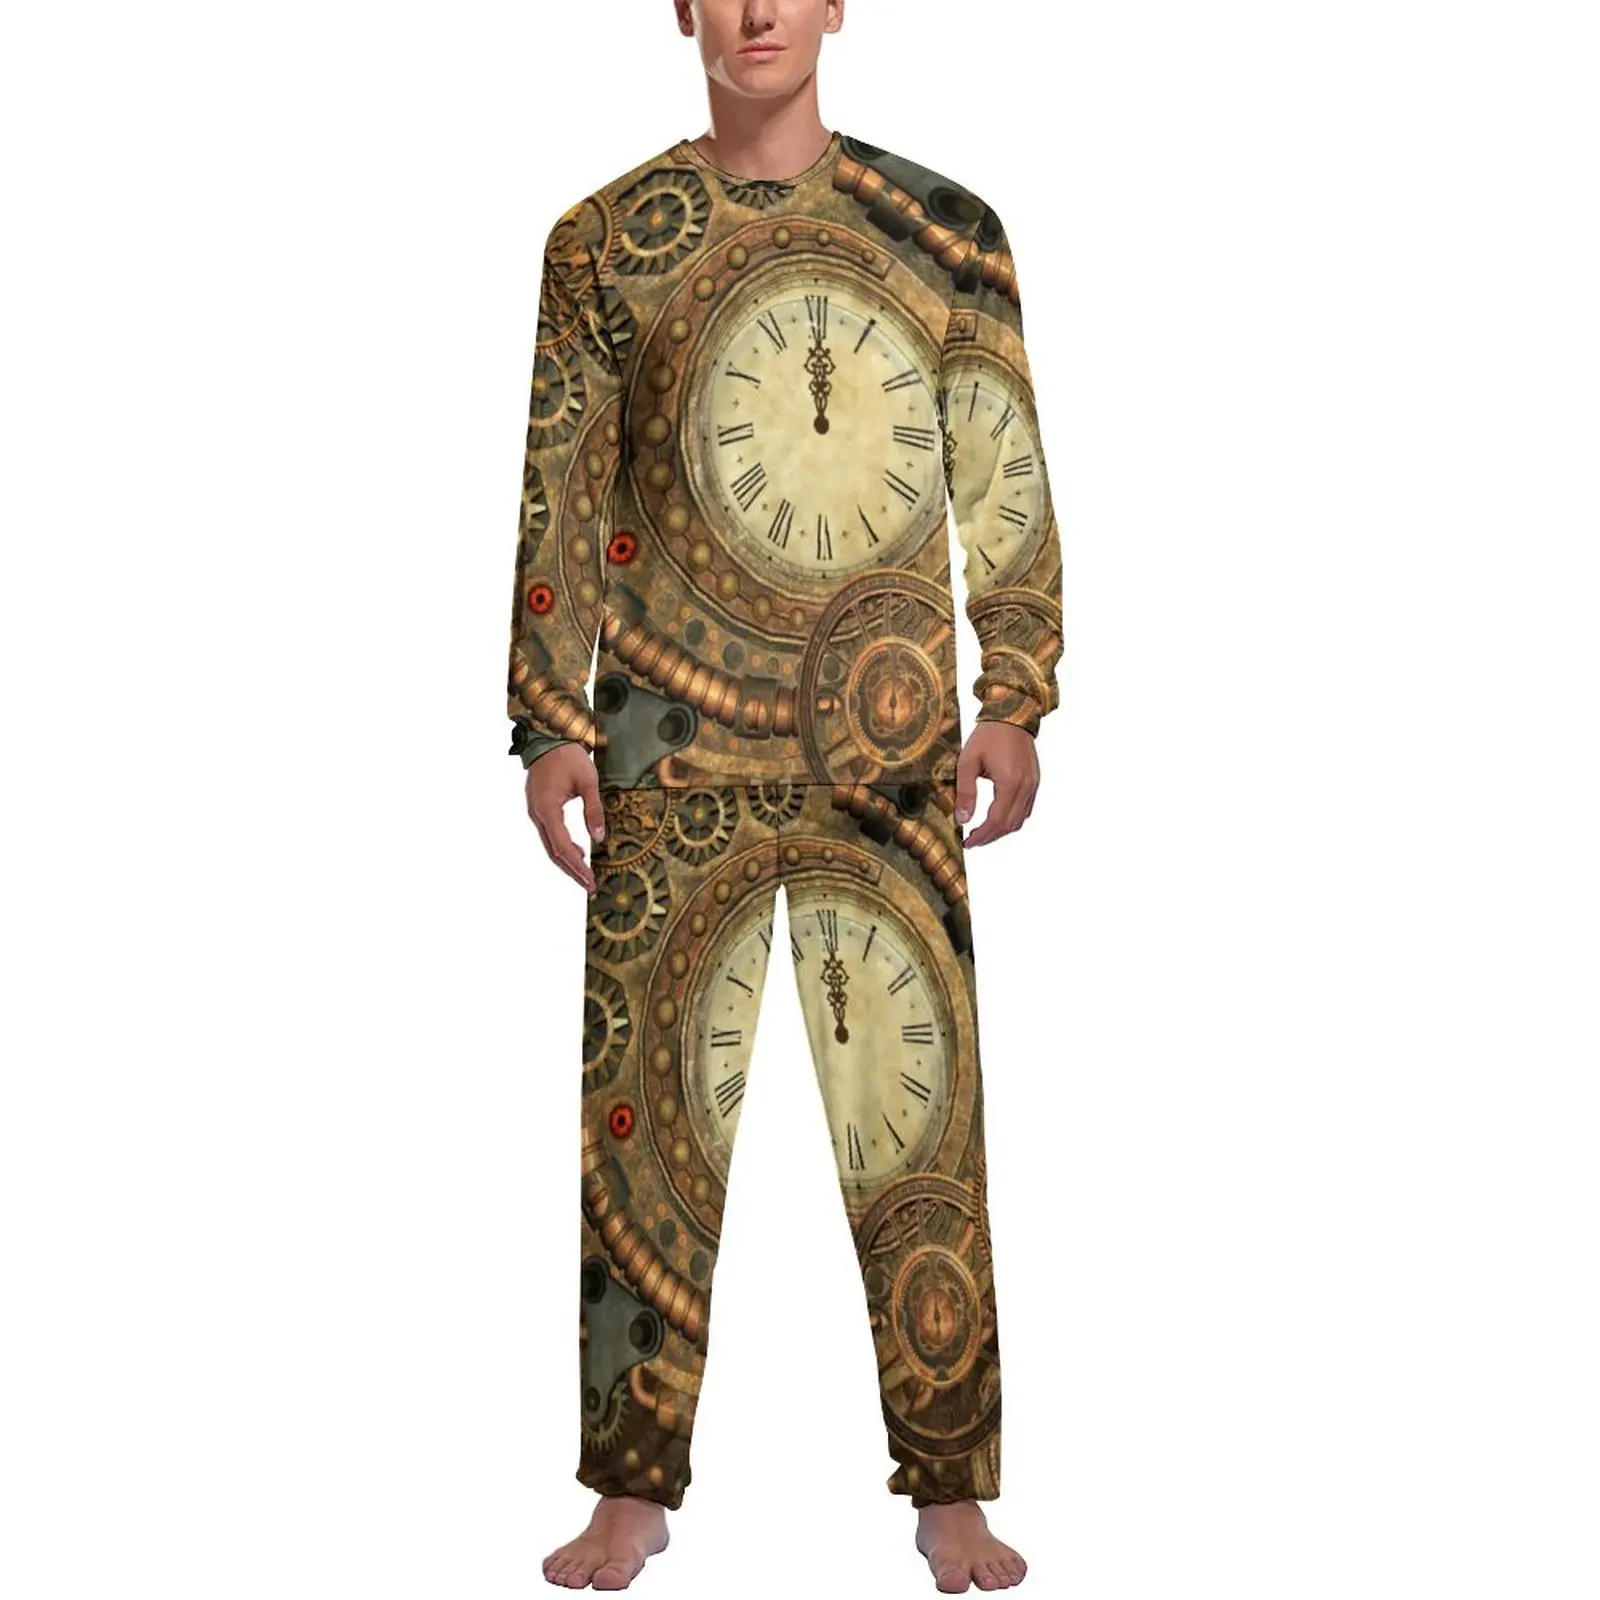 Steampunk Pajamas Spring Wonderful Clockwork Bedroom Home Suit Men 2 Piece Design Long-Sleeve Fashion Pajamas Set